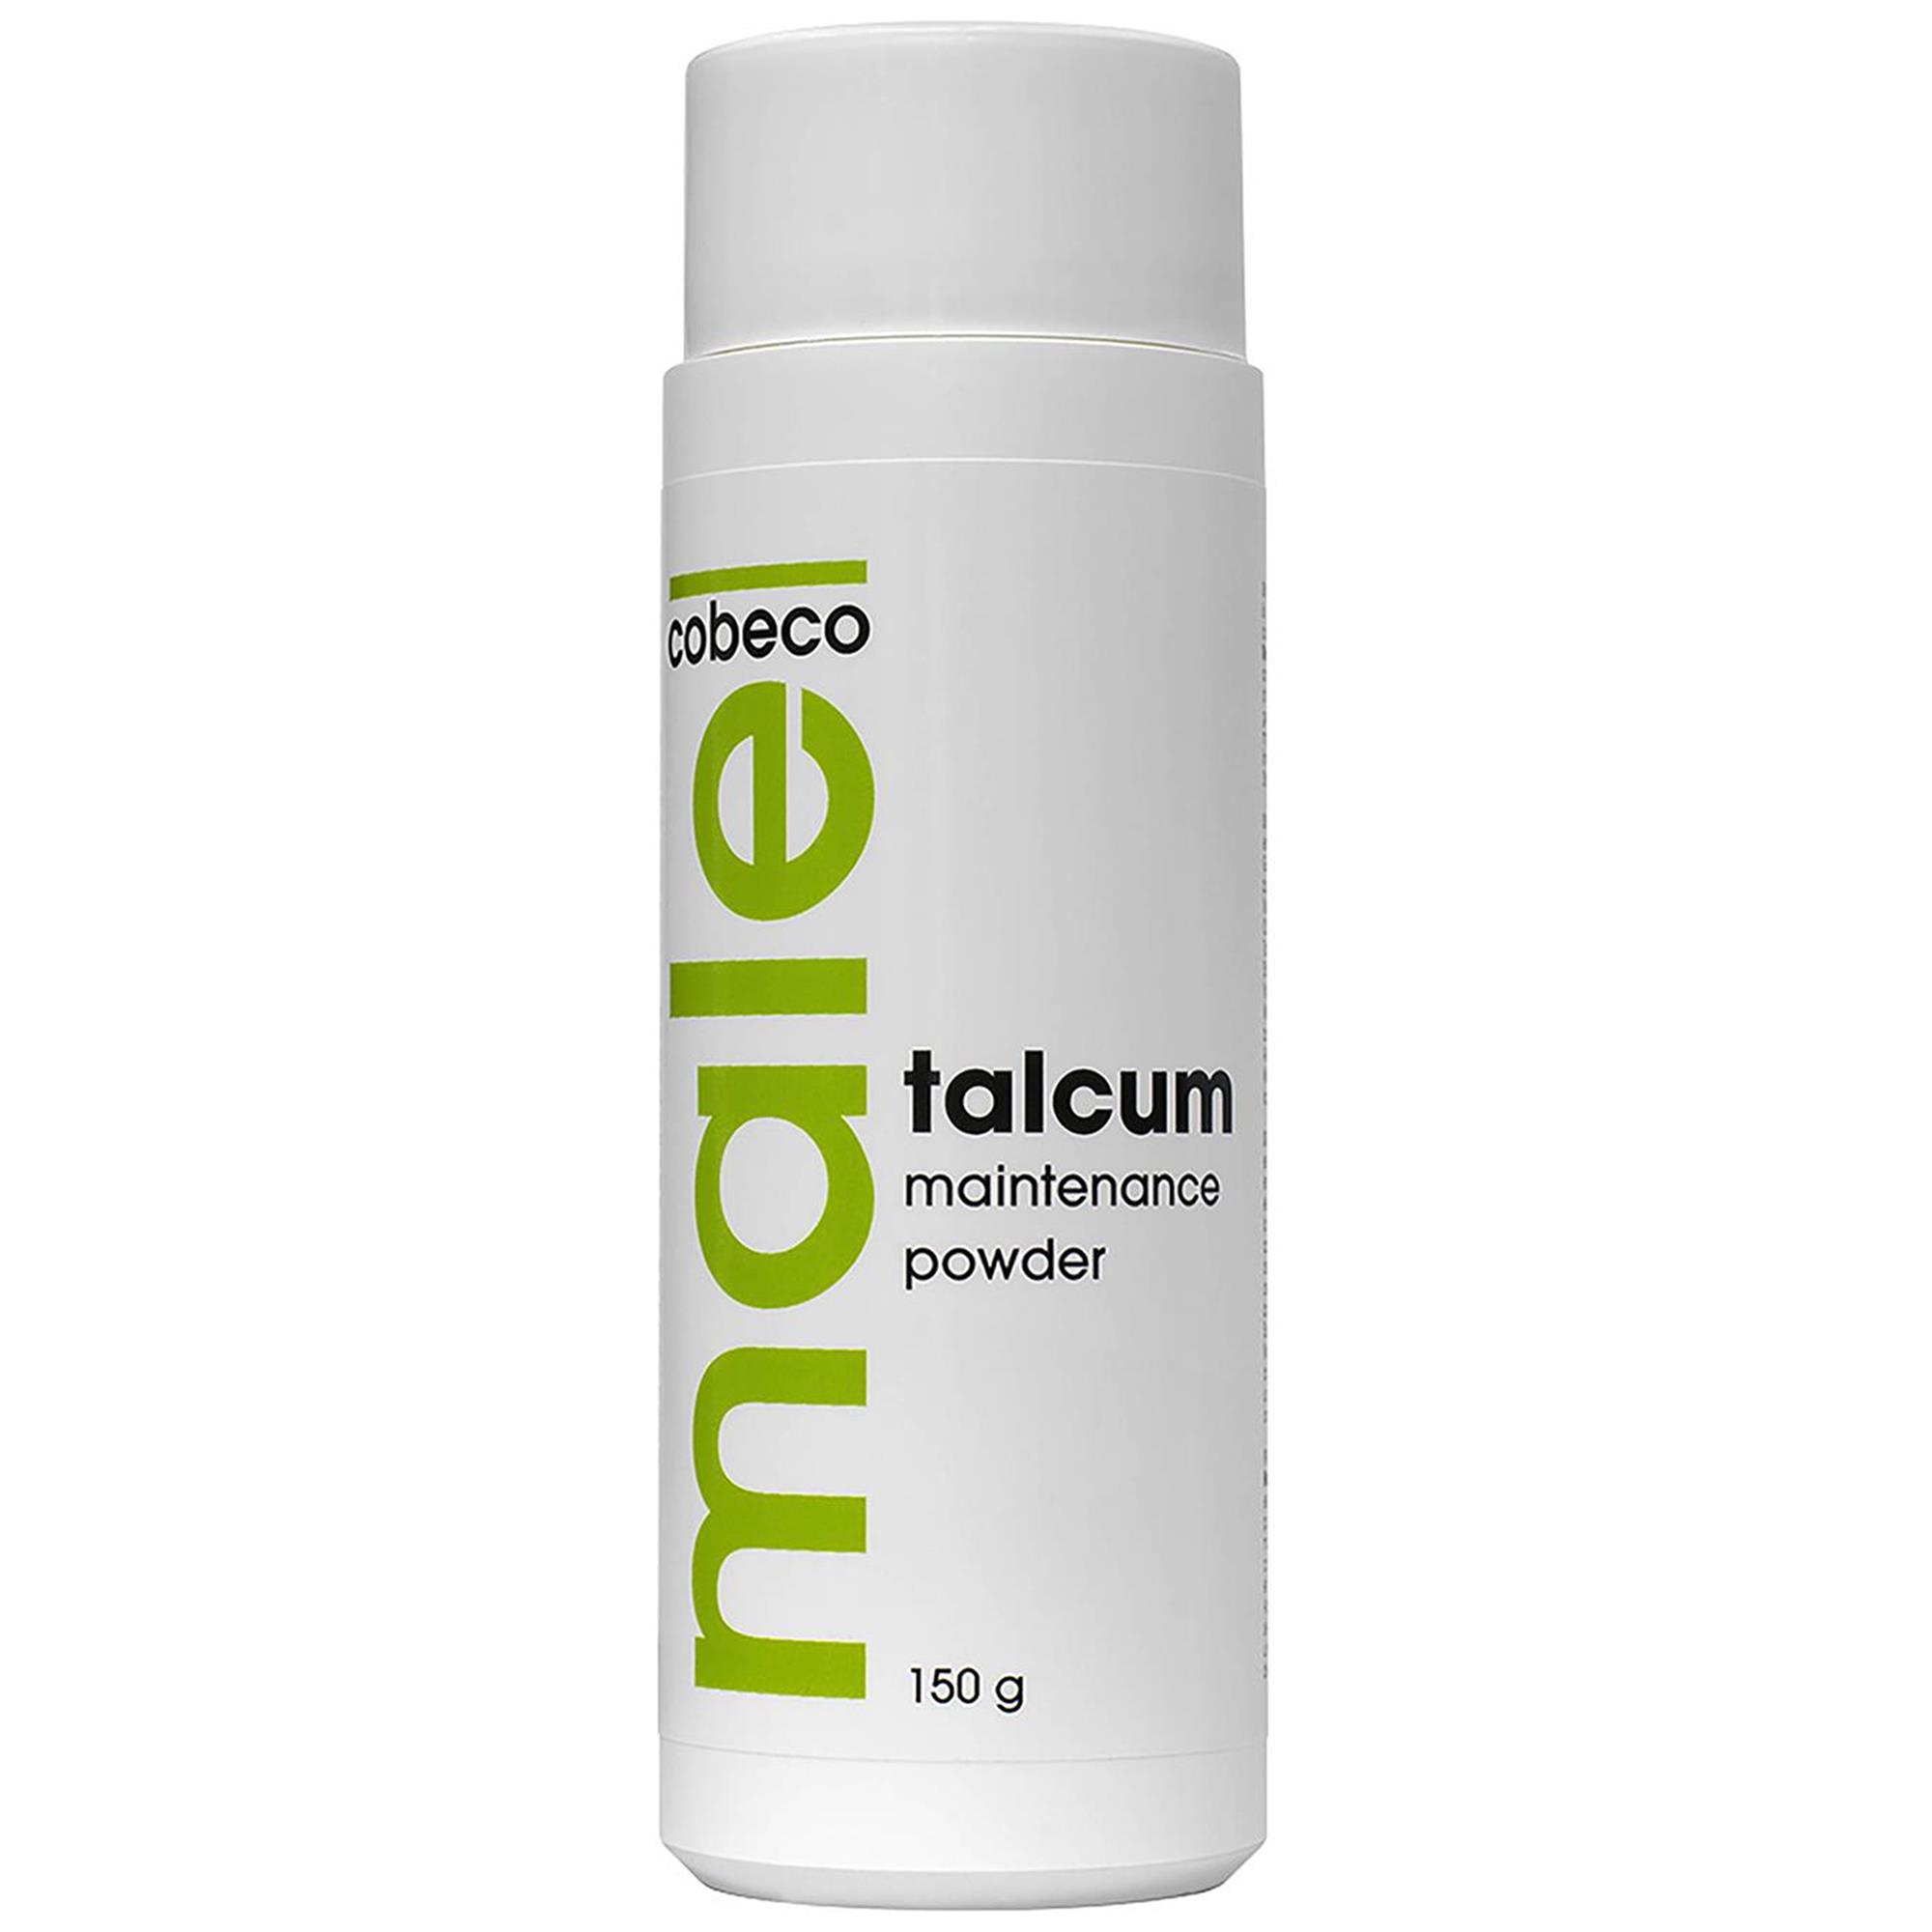 Male Cobeco Talcum Maintenance Powder 150g | Hygien | Intimast